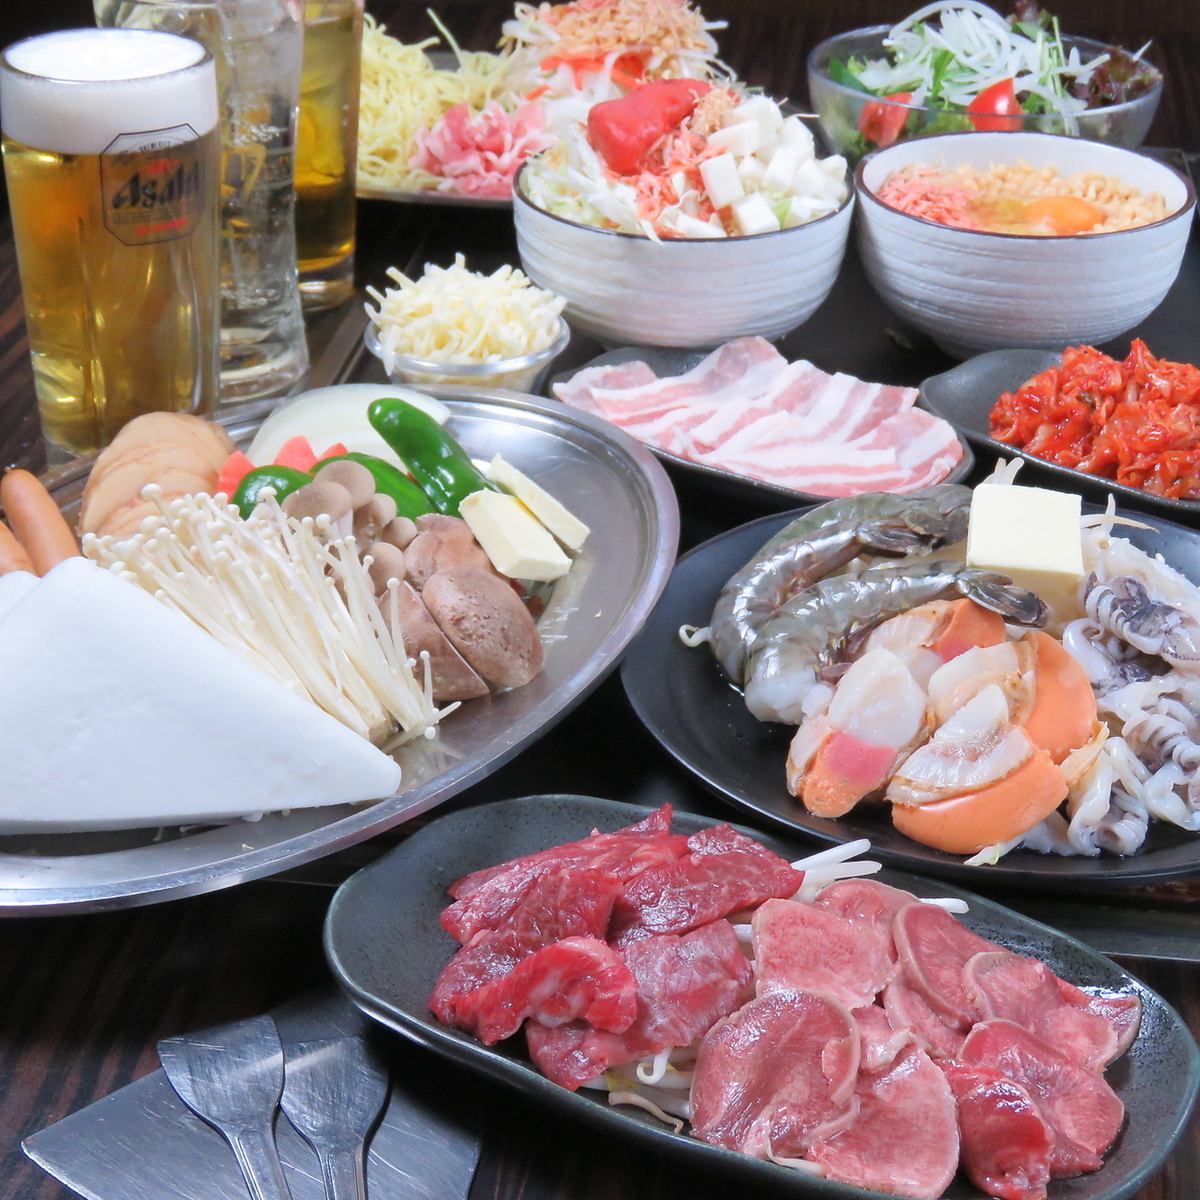 There are plenty of izakaya menus as well as monjayaki, okonomiyaki, and teppanyaki!